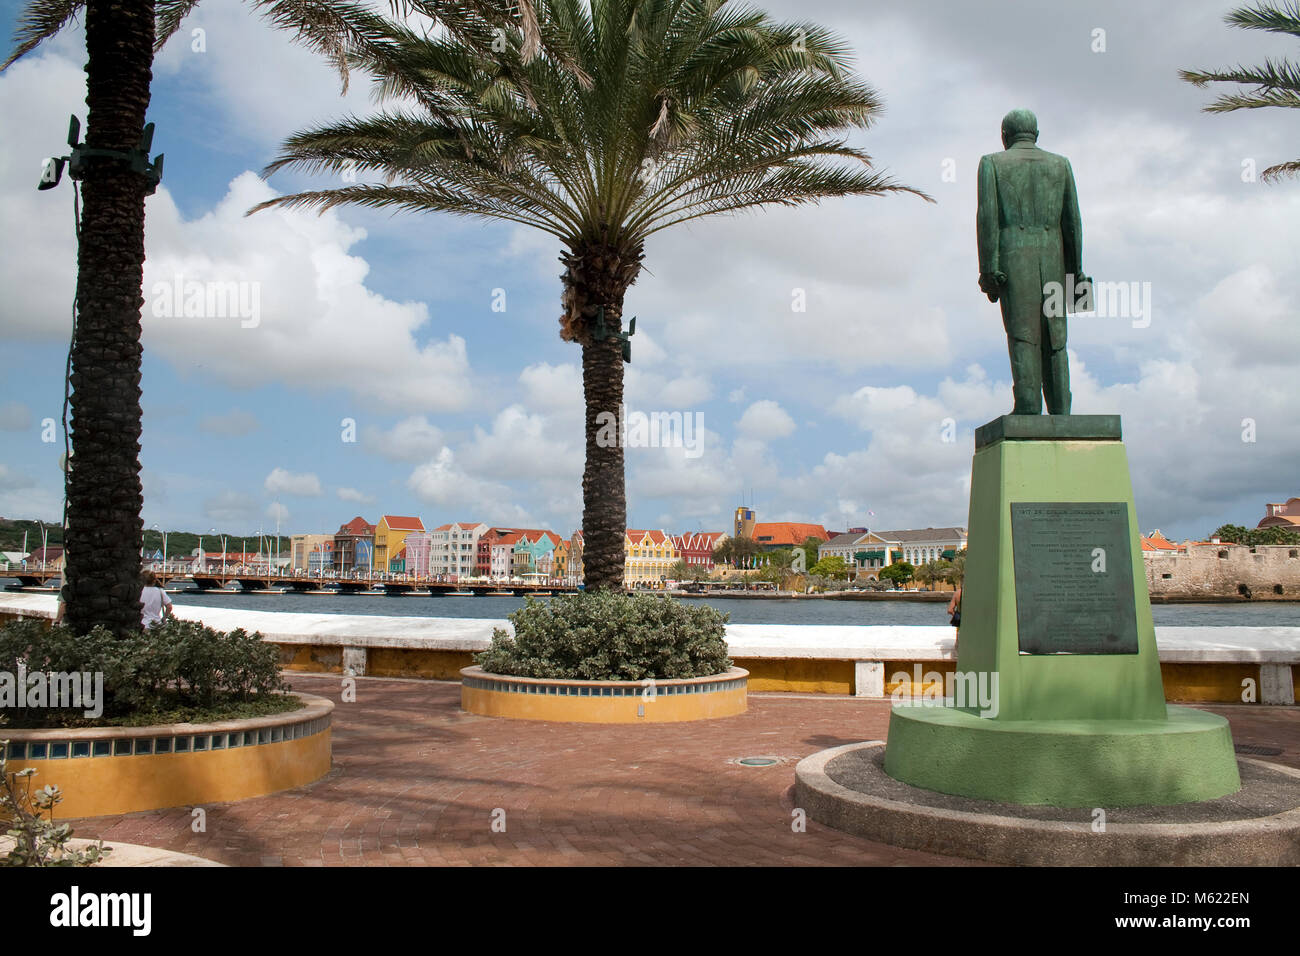 Il dott. Efrain Jonchkeer Statua di Rif Fort, ex primo ministro delle Antille olandesi, Willemstad, Curacao, Antille olandesi, dei Caraibi Foto Stock